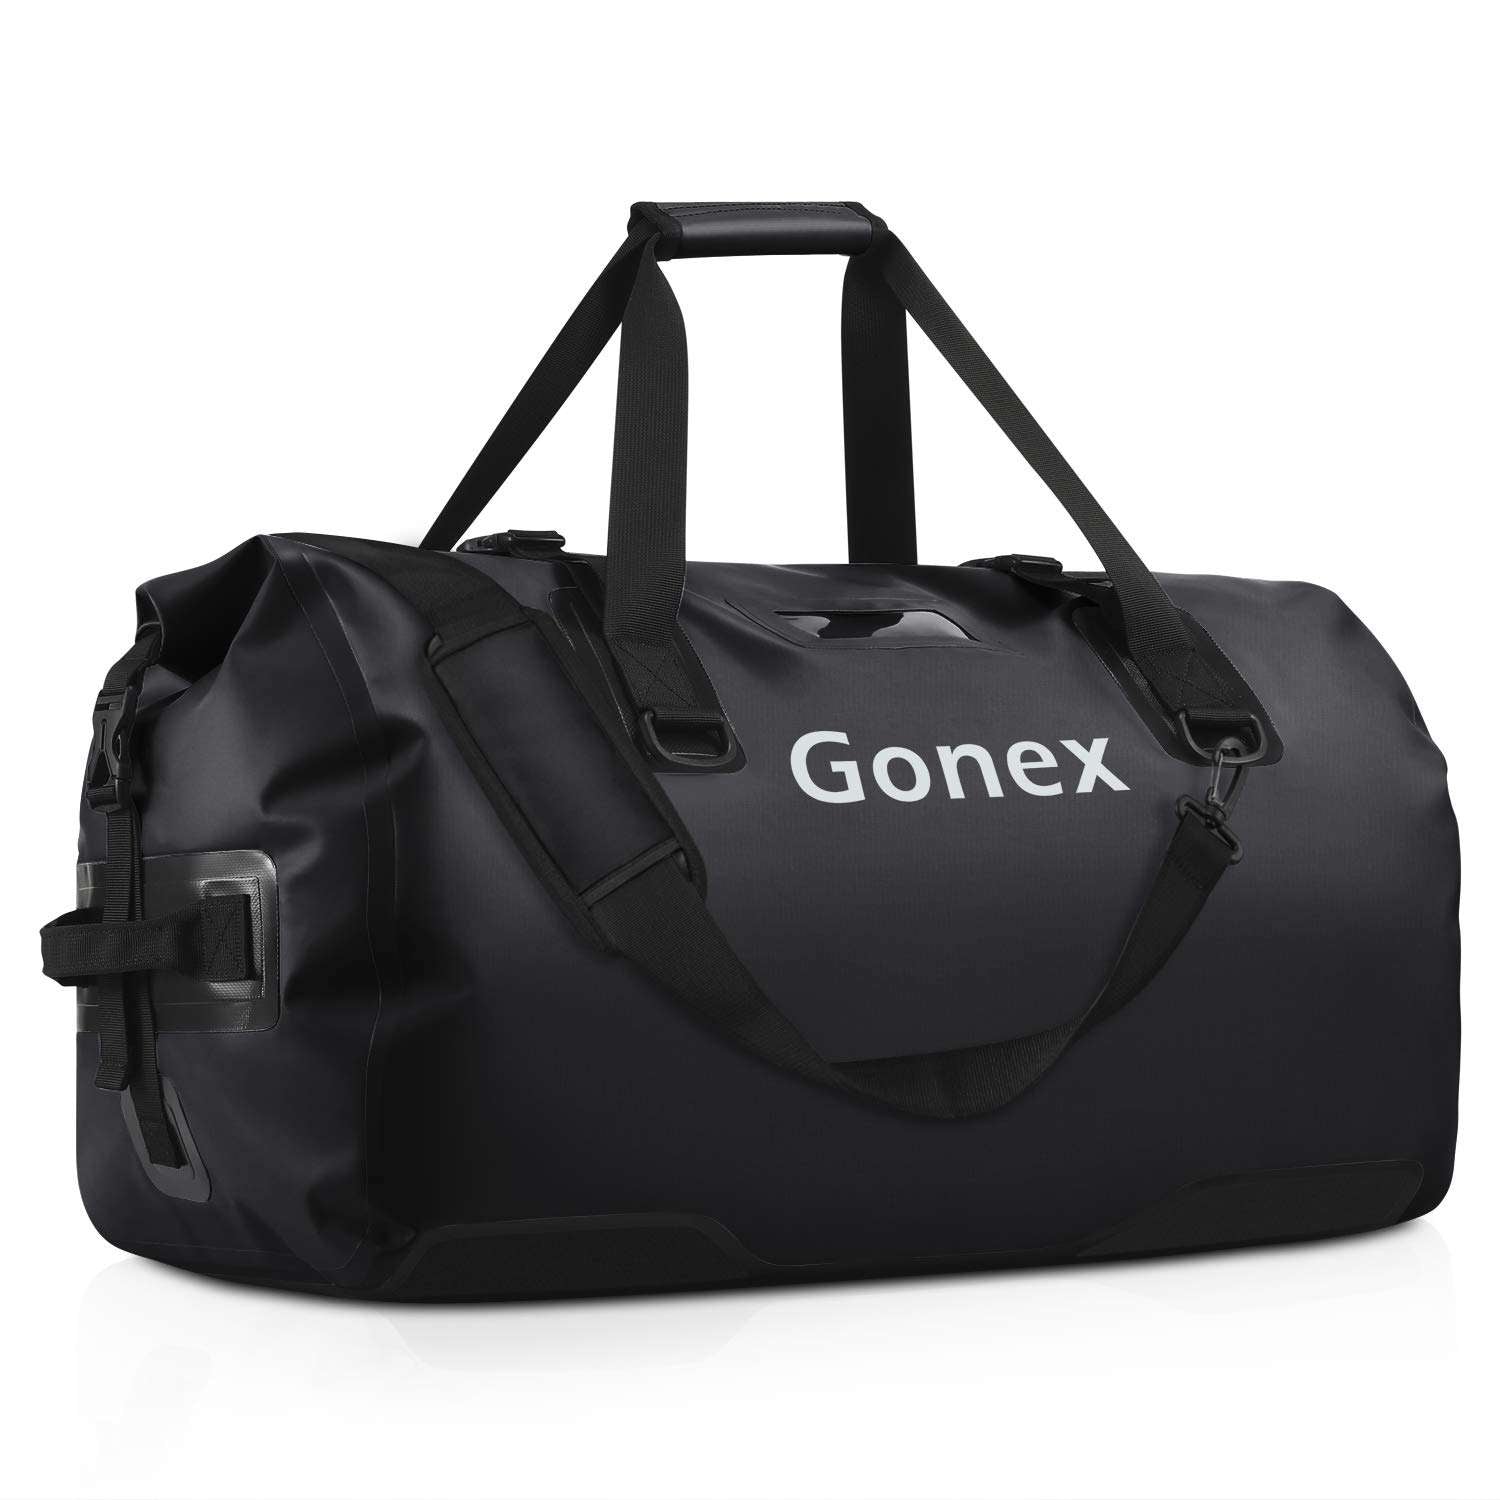 Gonex travel duffel bag